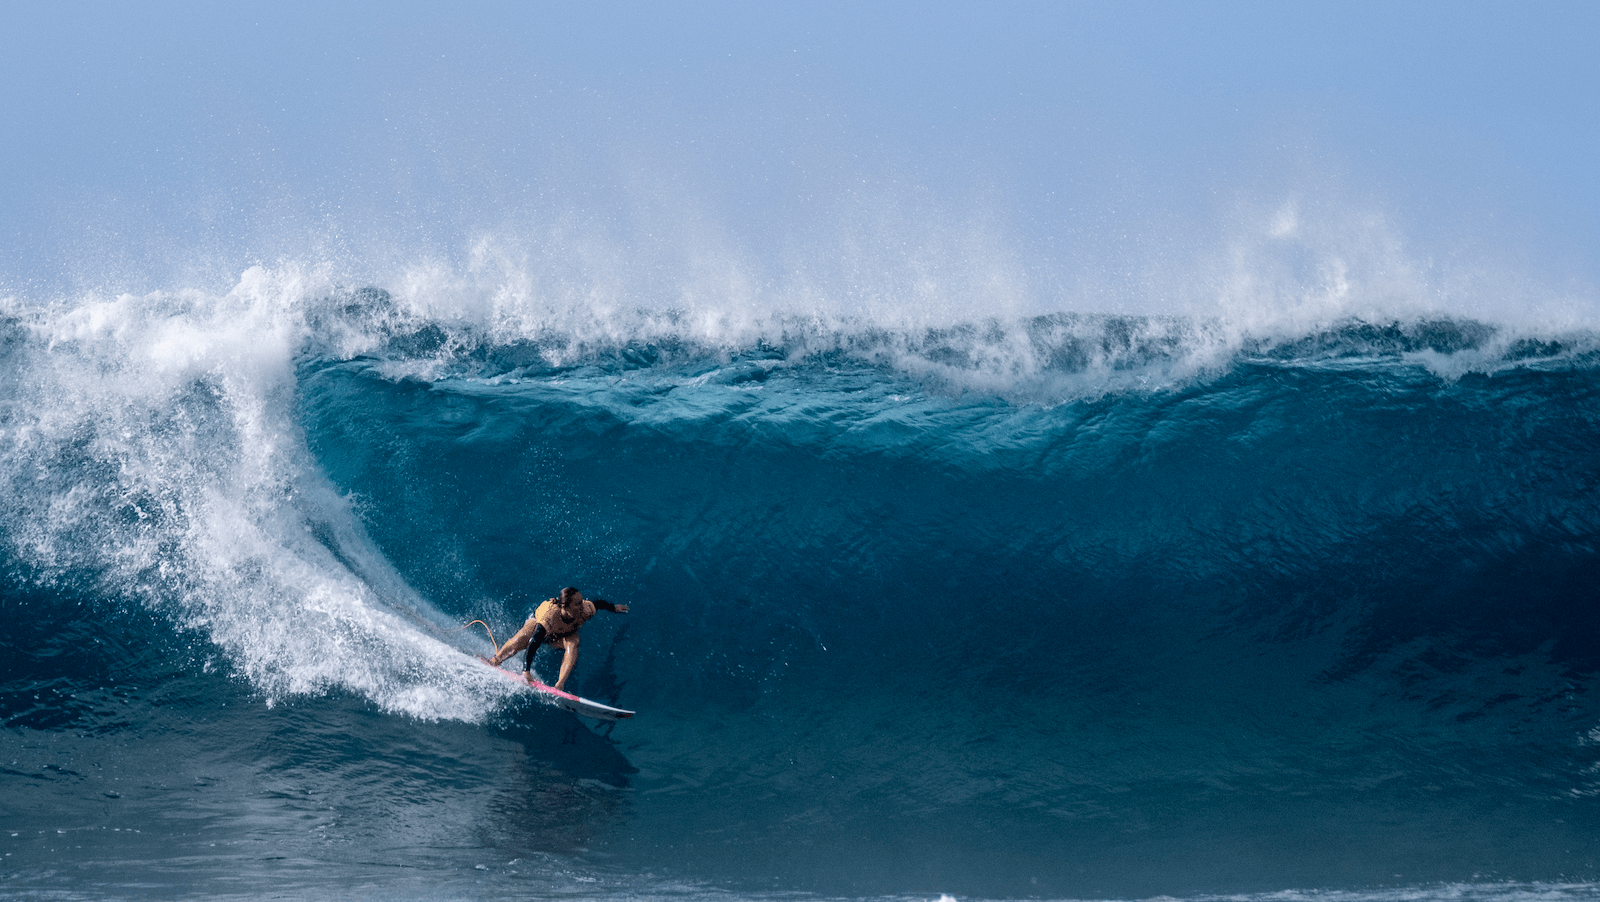 Carissa Moore_Oahu_Billabong Pipeline Pro_credit Keoki Saguibo:World Surf League via Getty Images_800x450